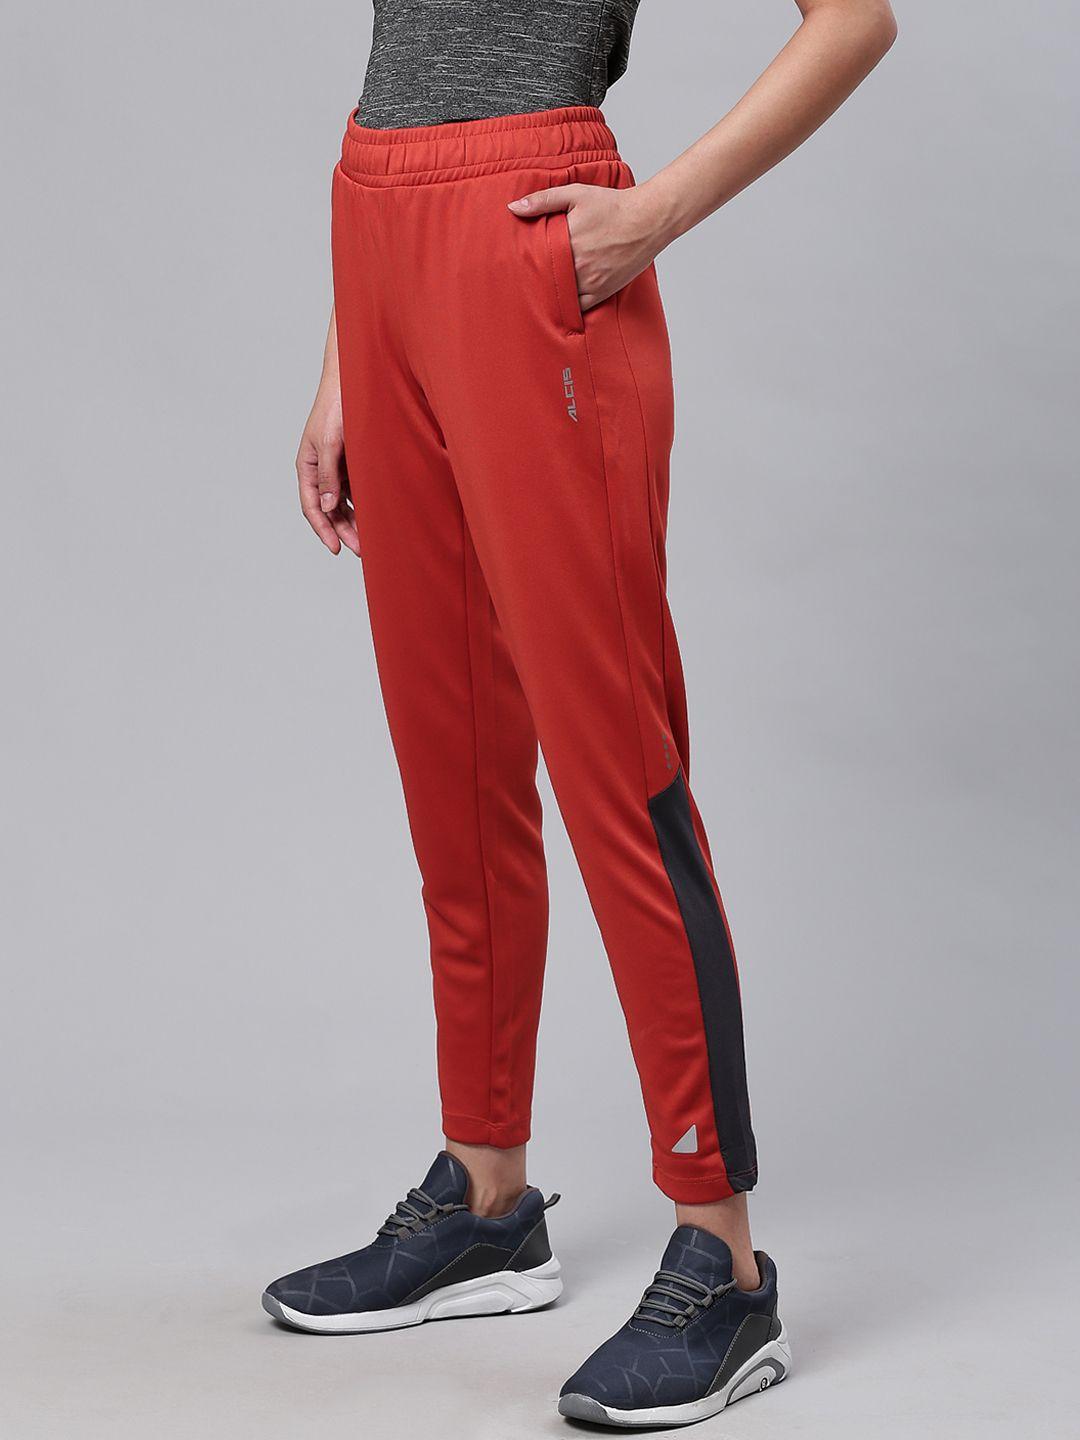 alcis-women-rust-orange-slim-fit-solid-cropped-running-track-pants